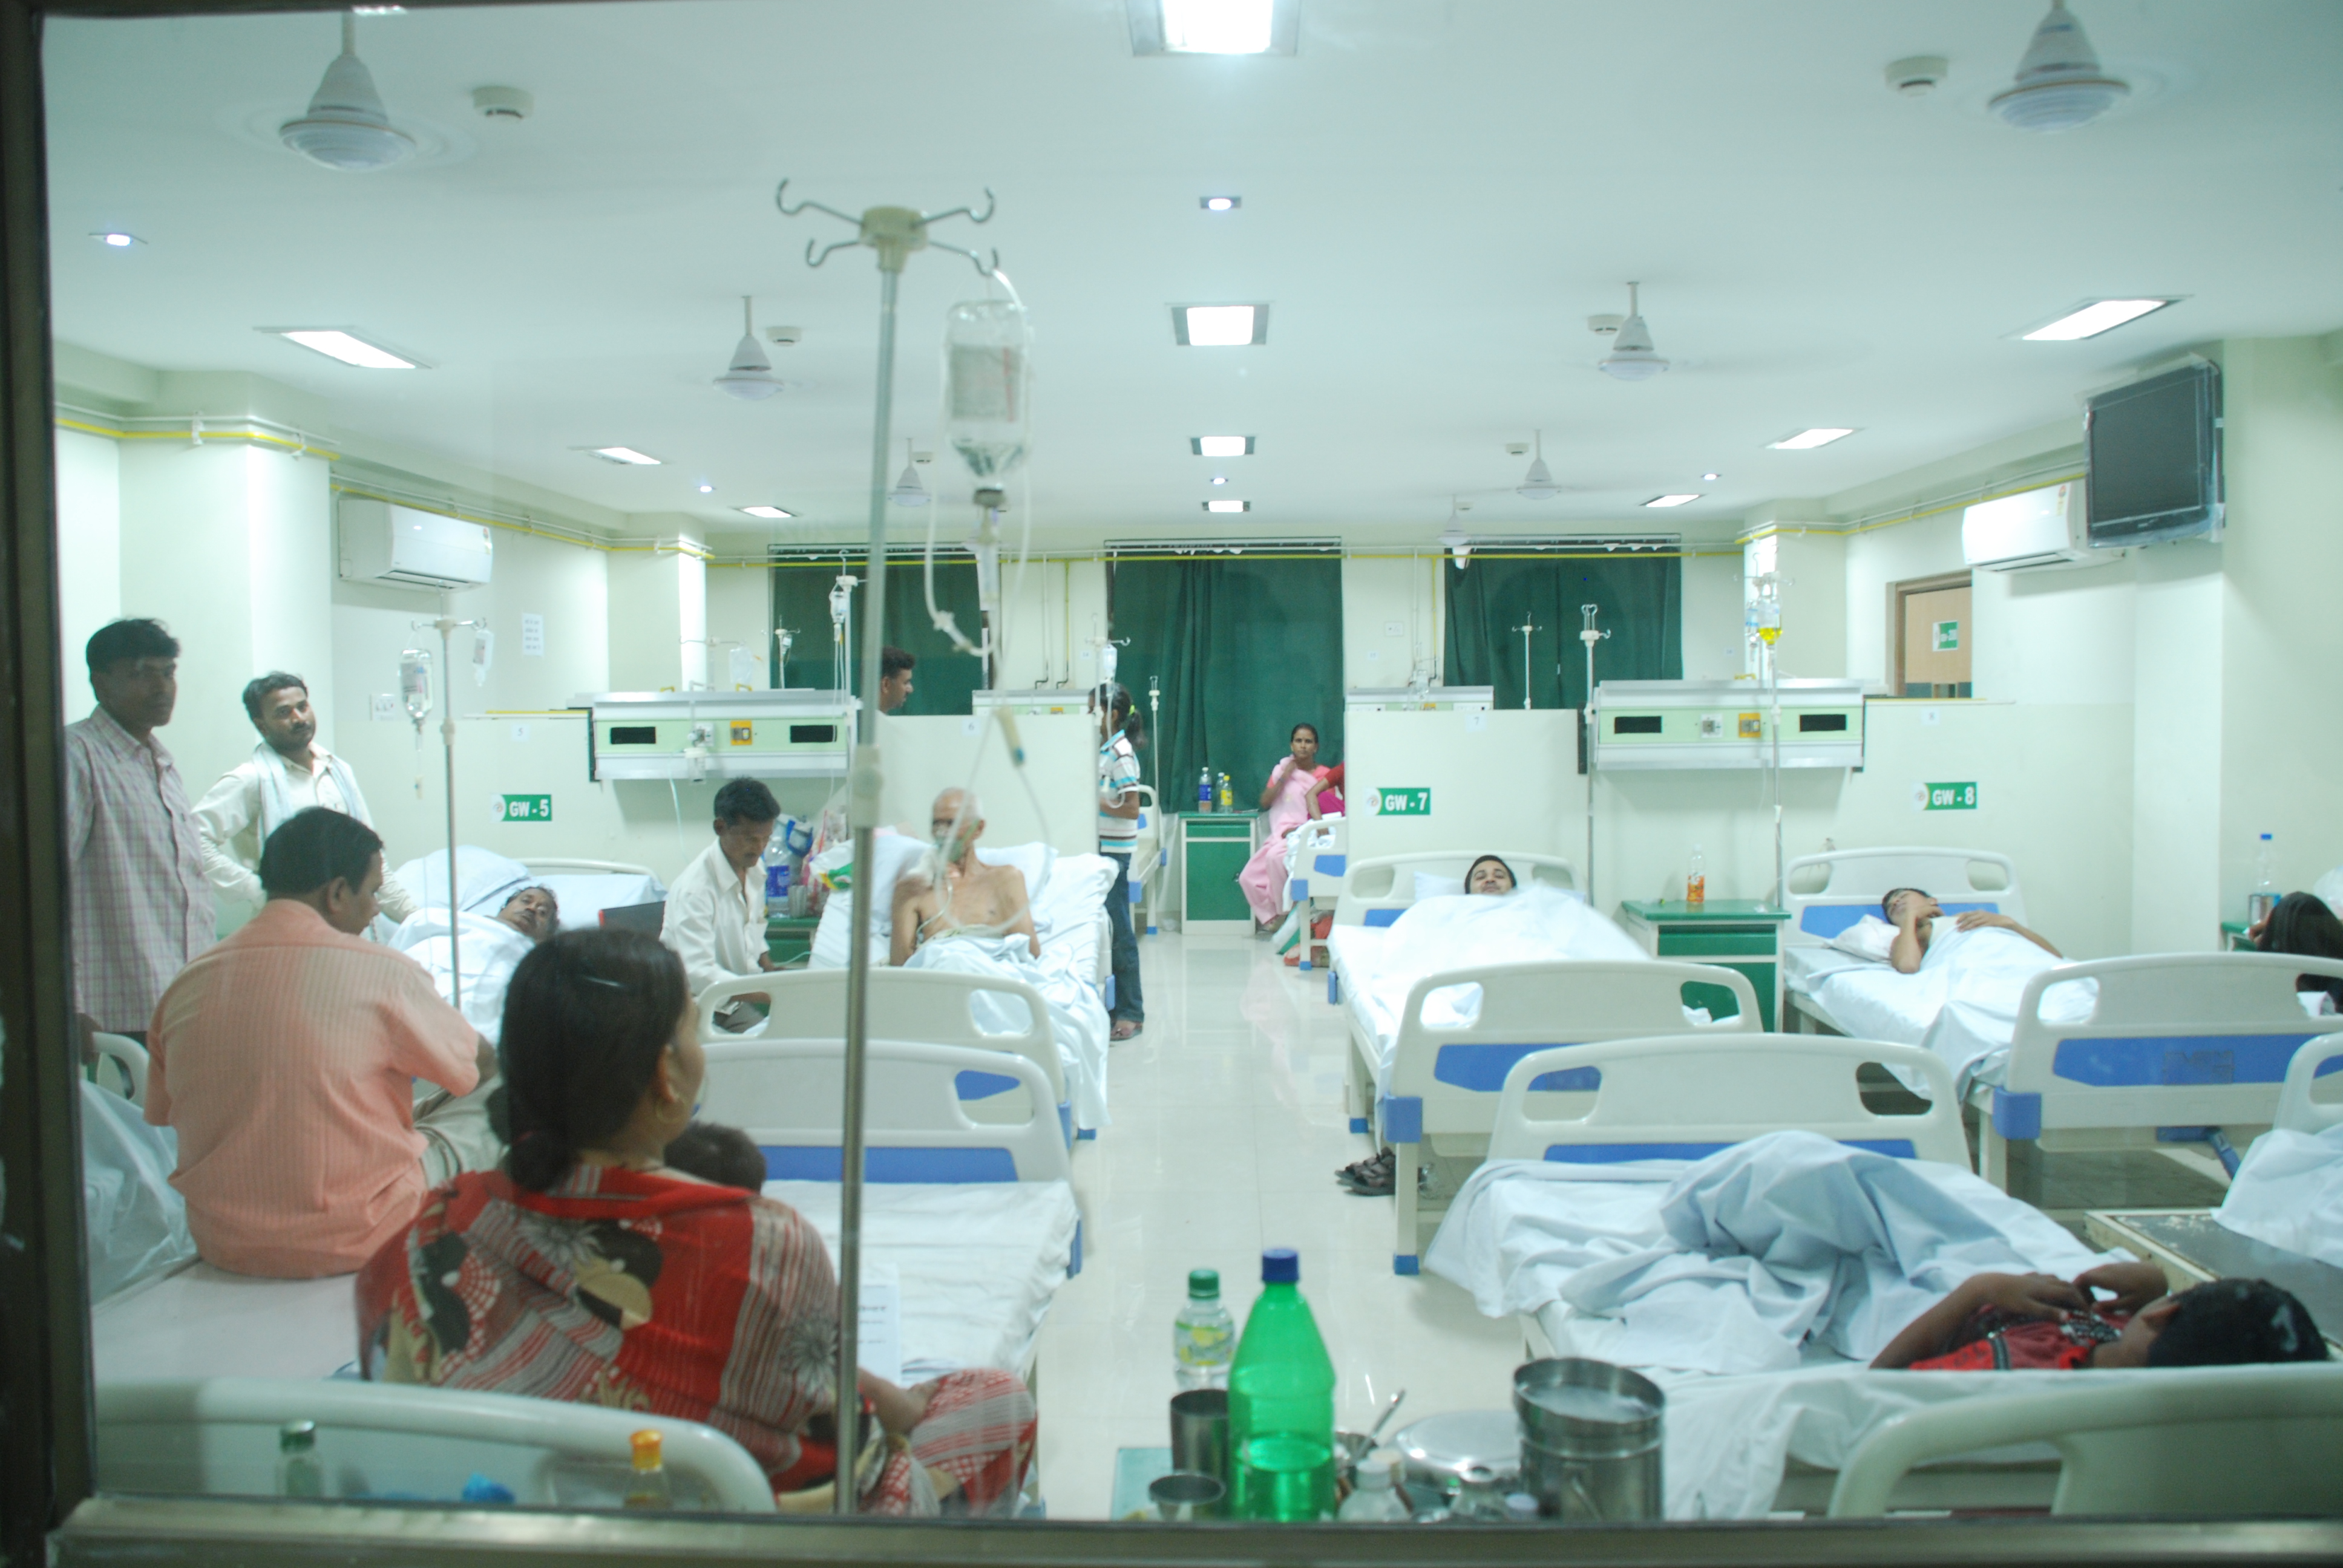 prasad hospital & research center varanasi photos